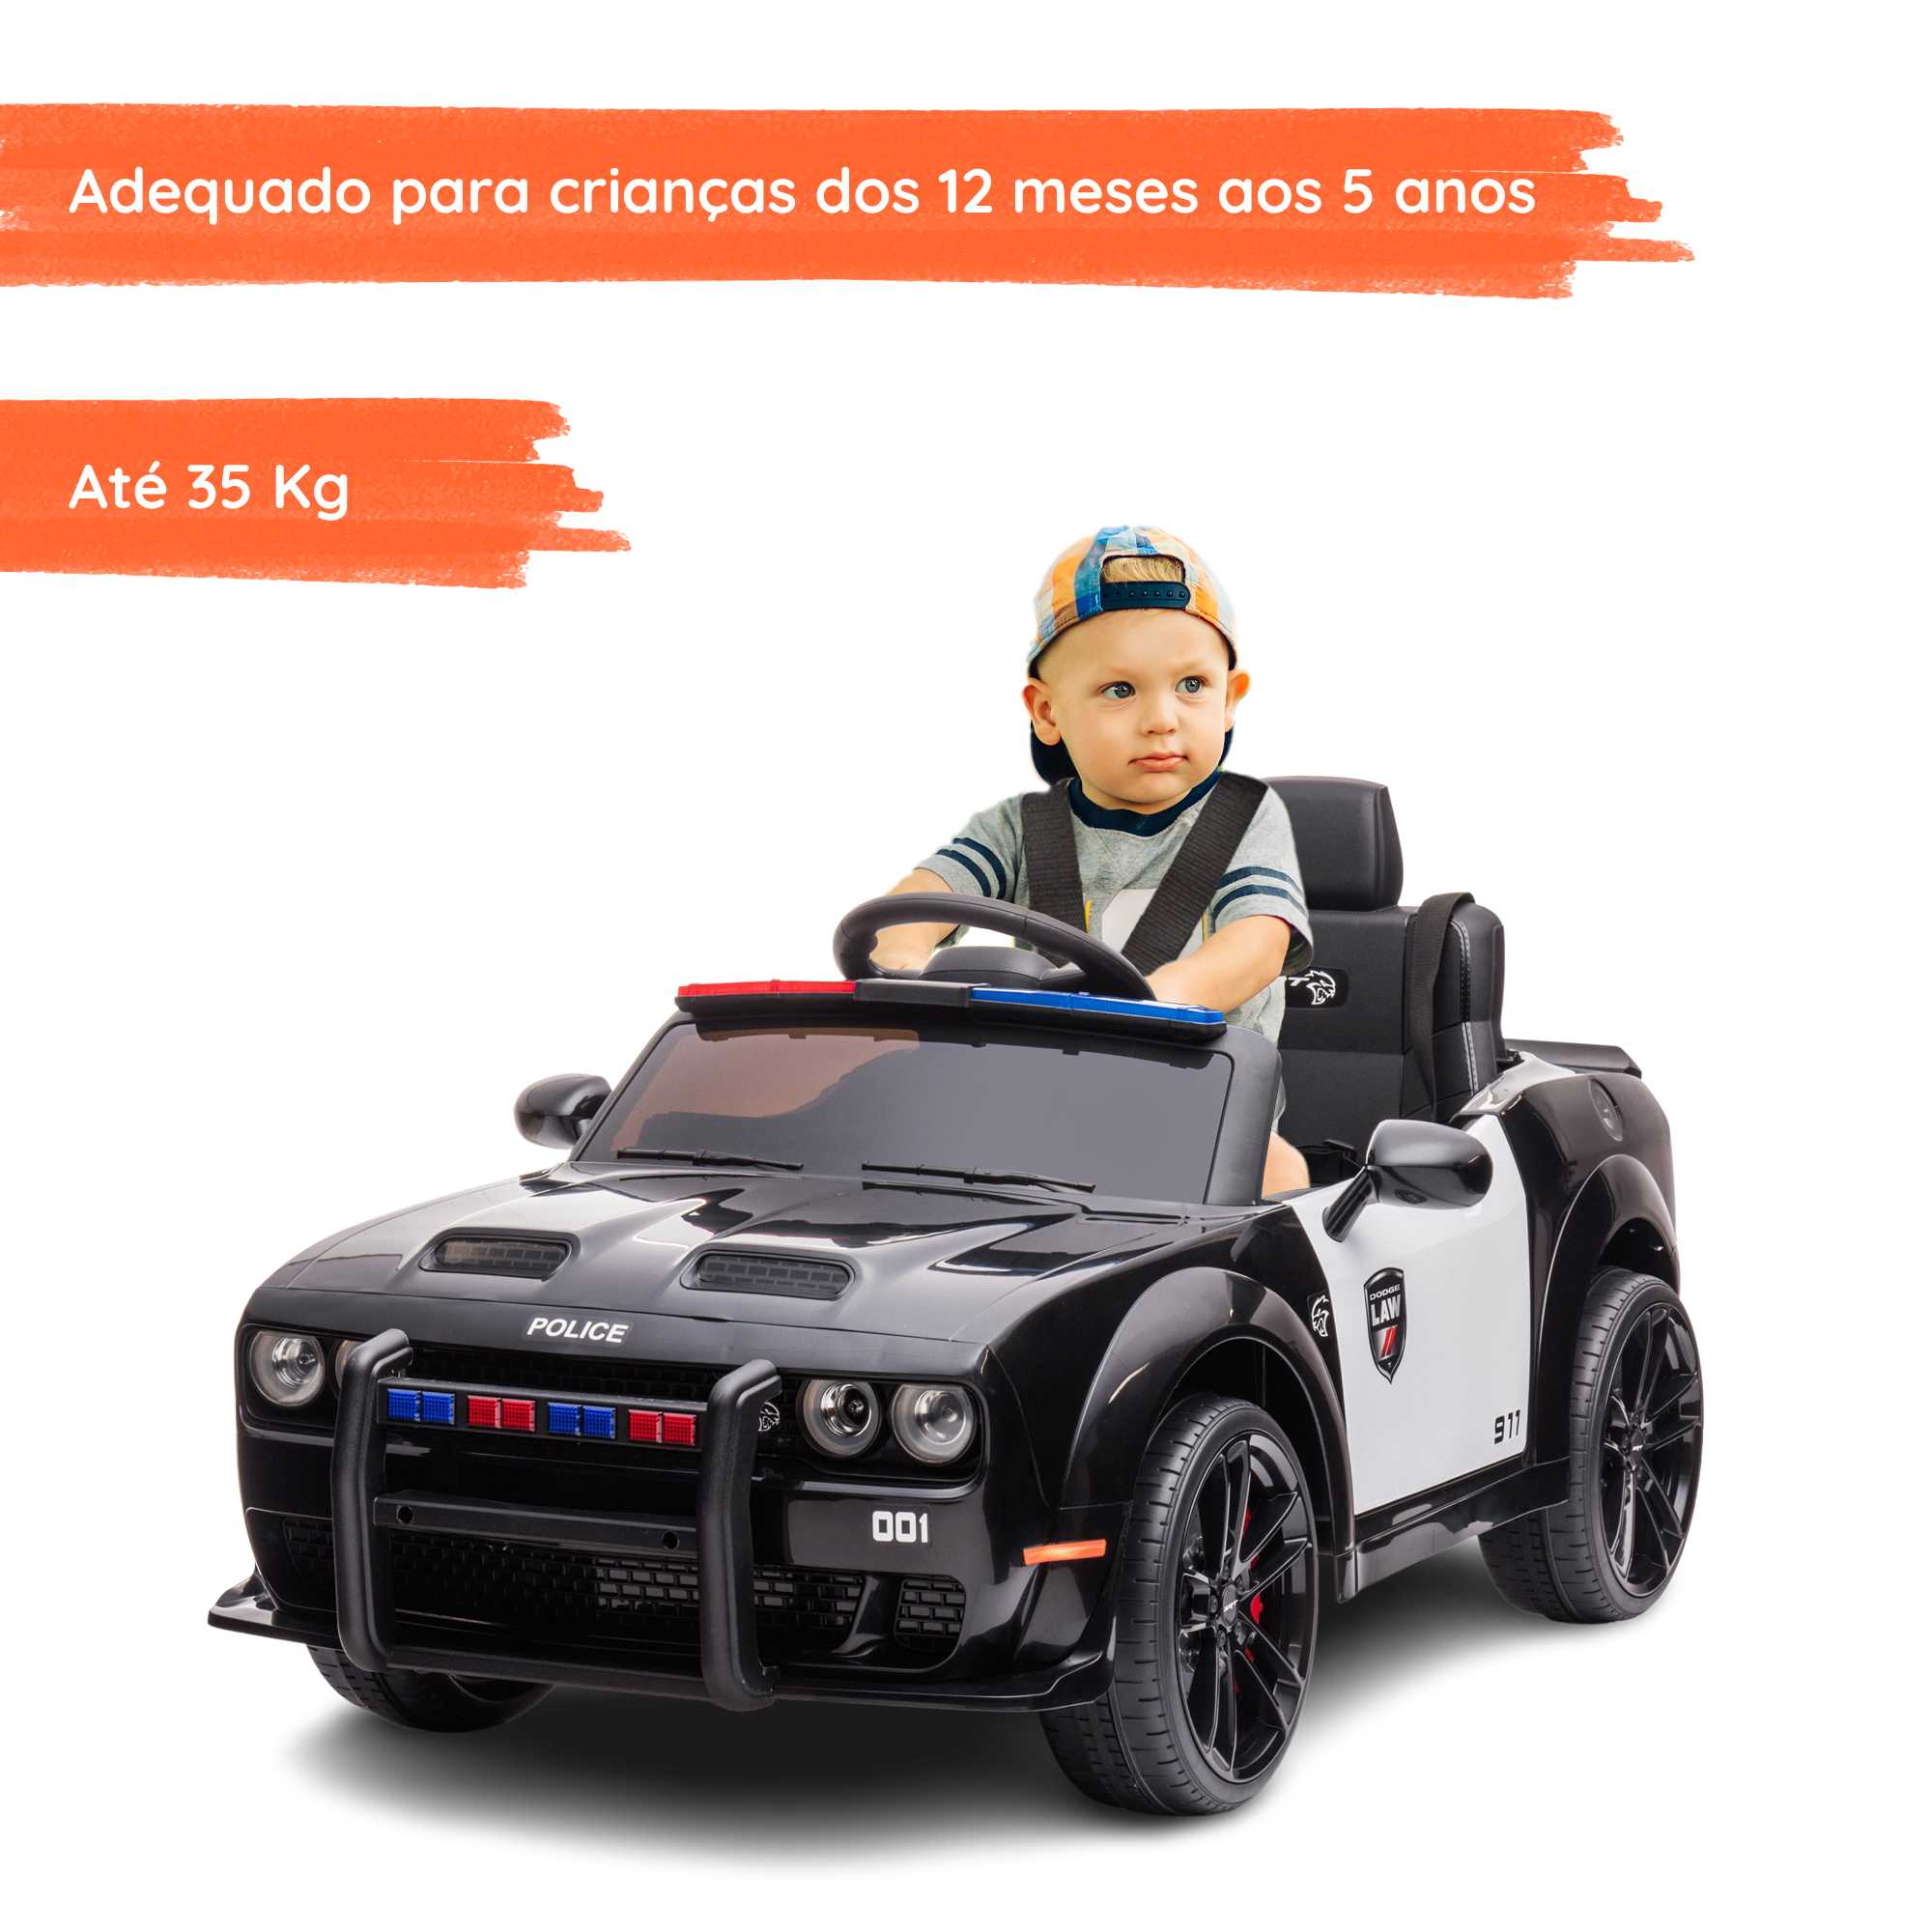 Dodge Police com criança